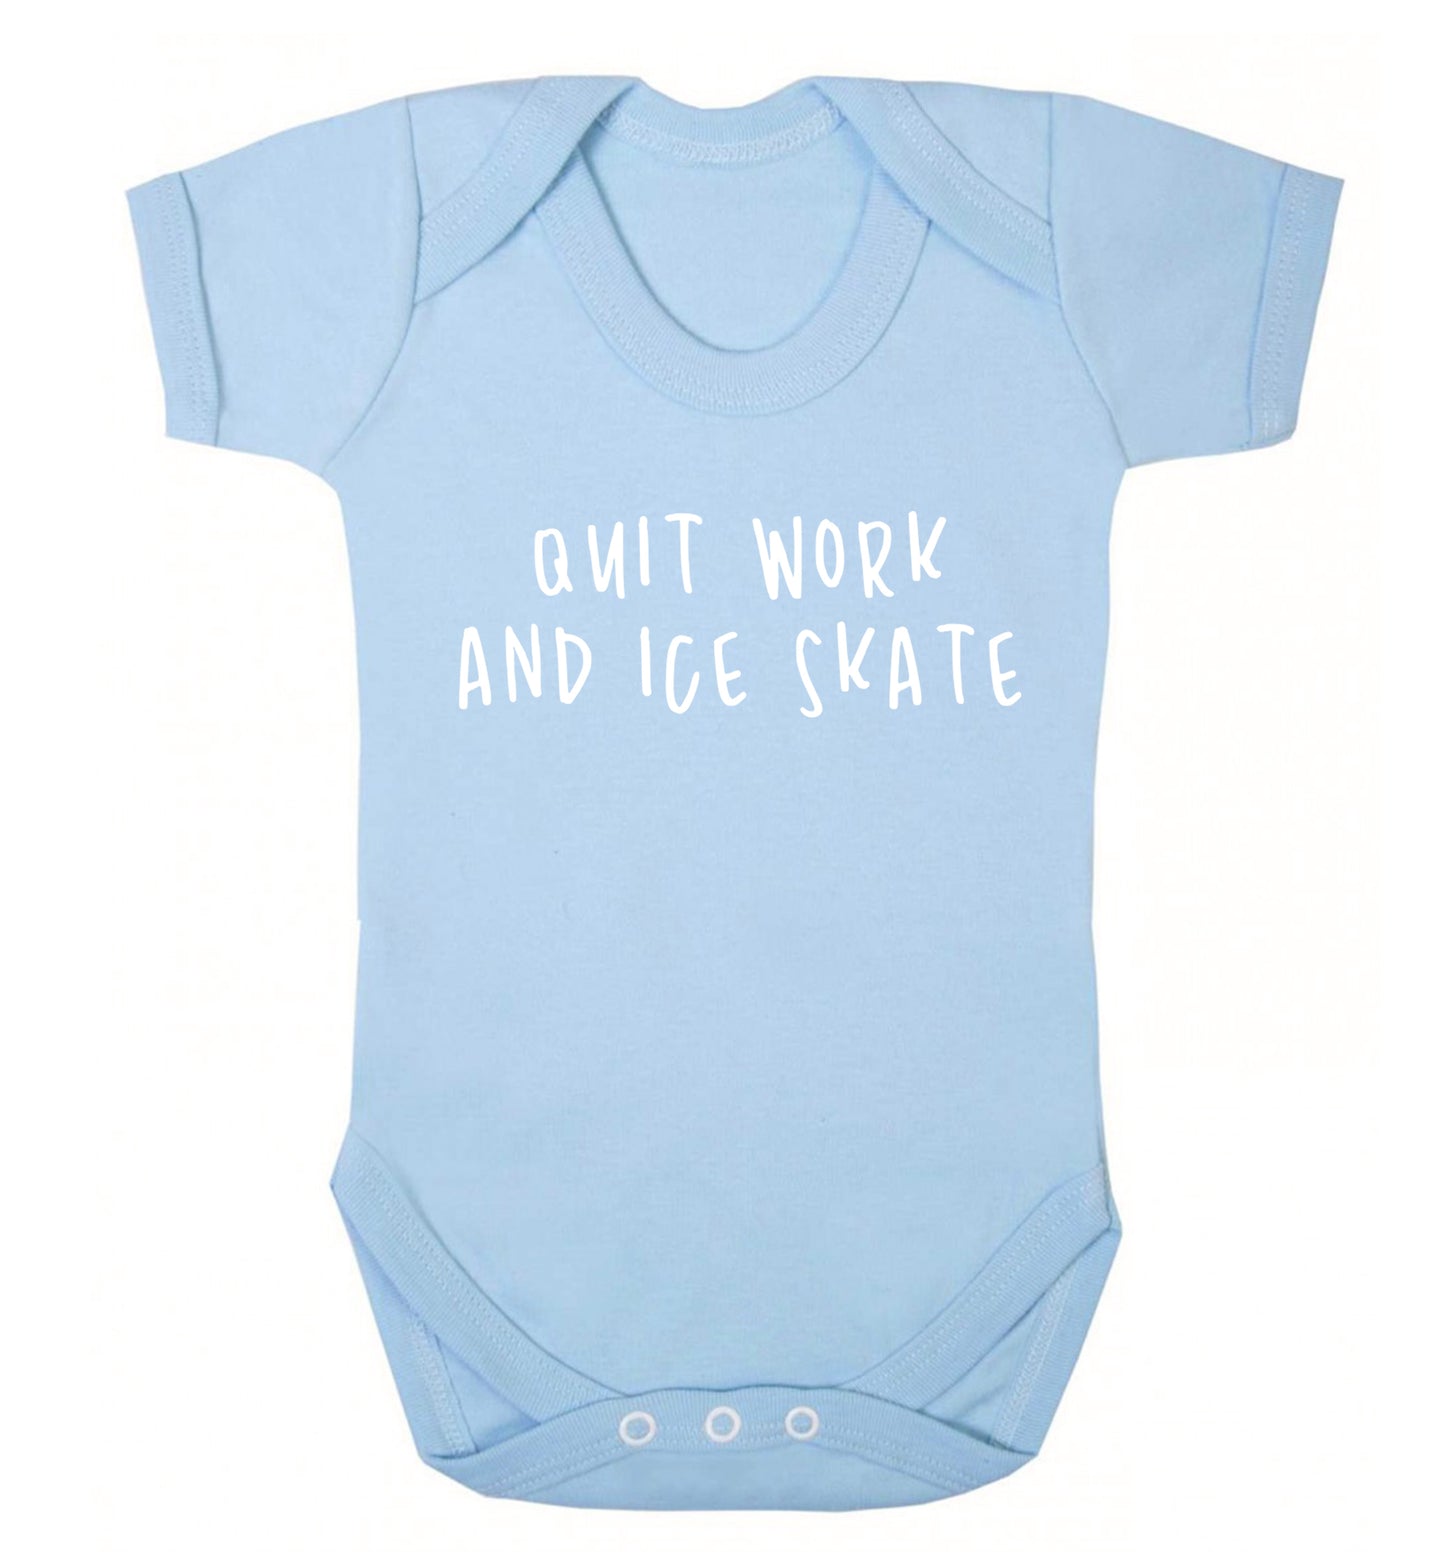 Quit work ice skate Baby Vest pale blue 18-24 months